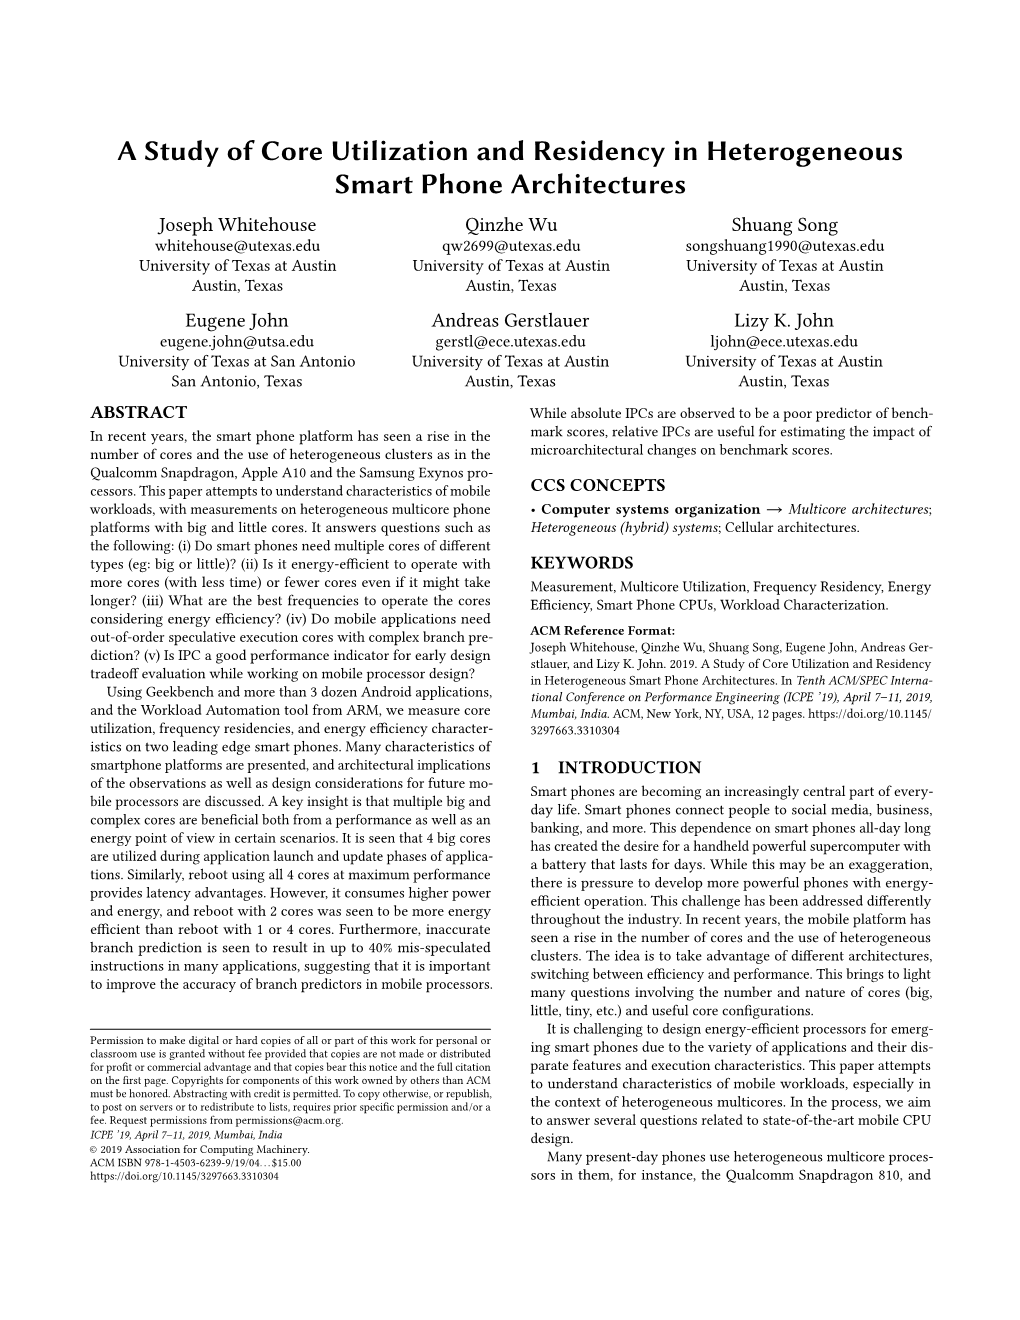 A Study of Core Utilization and Residency in Heterogeneous Smart